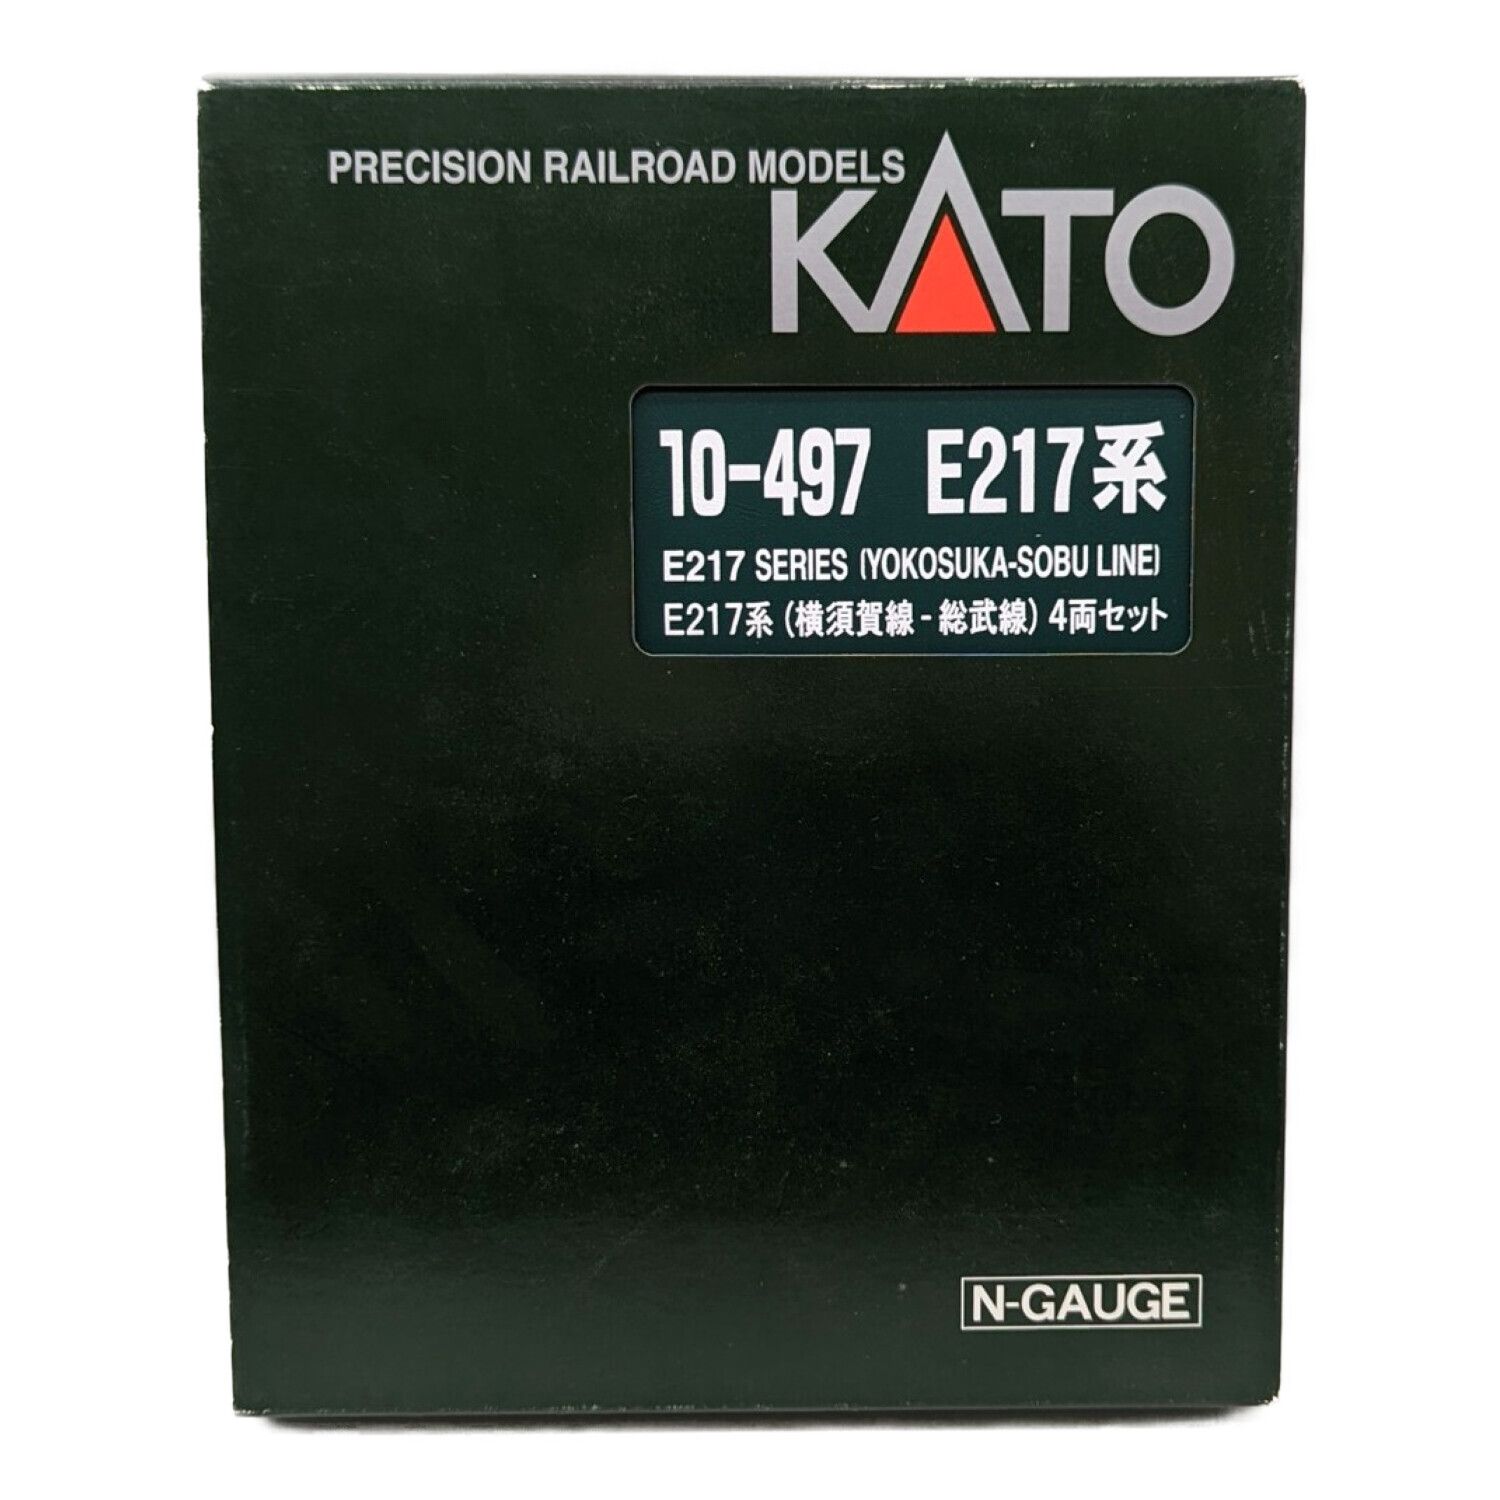 KATO (カトー) Nゲージ 10-497 E217系(横須賀線・総武線) 4両セット 